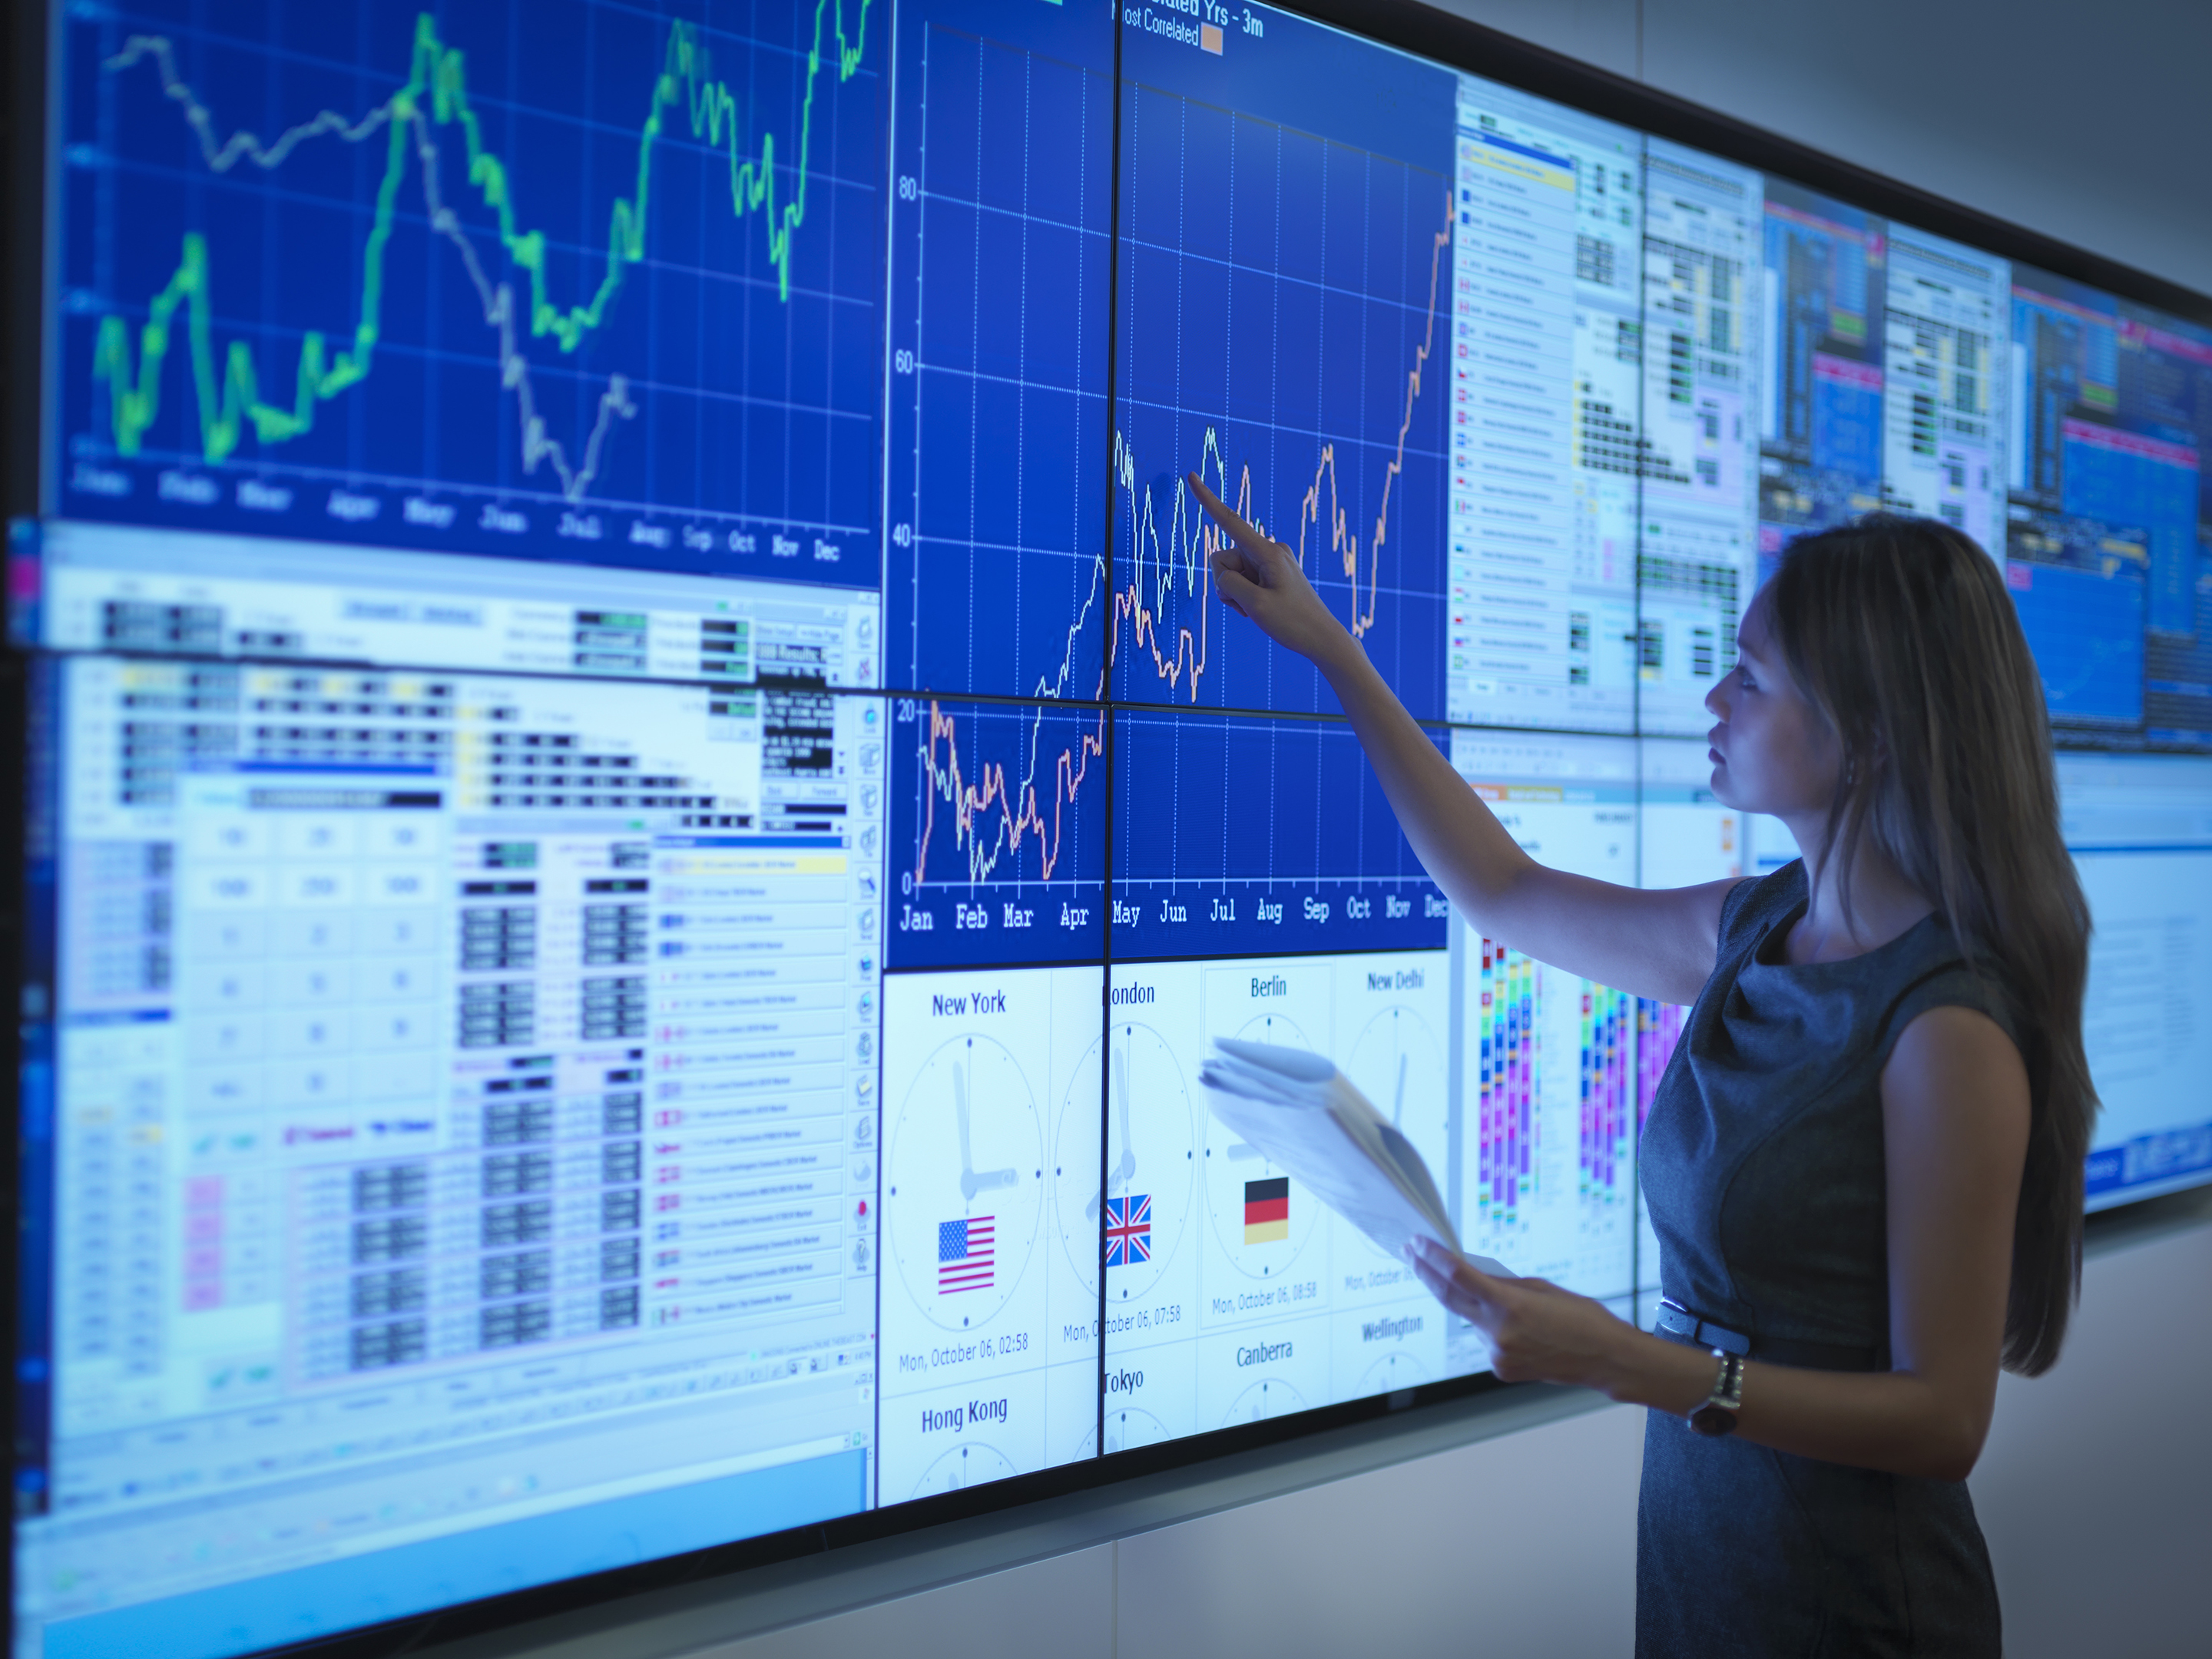 Woman analyzing data on a large screen